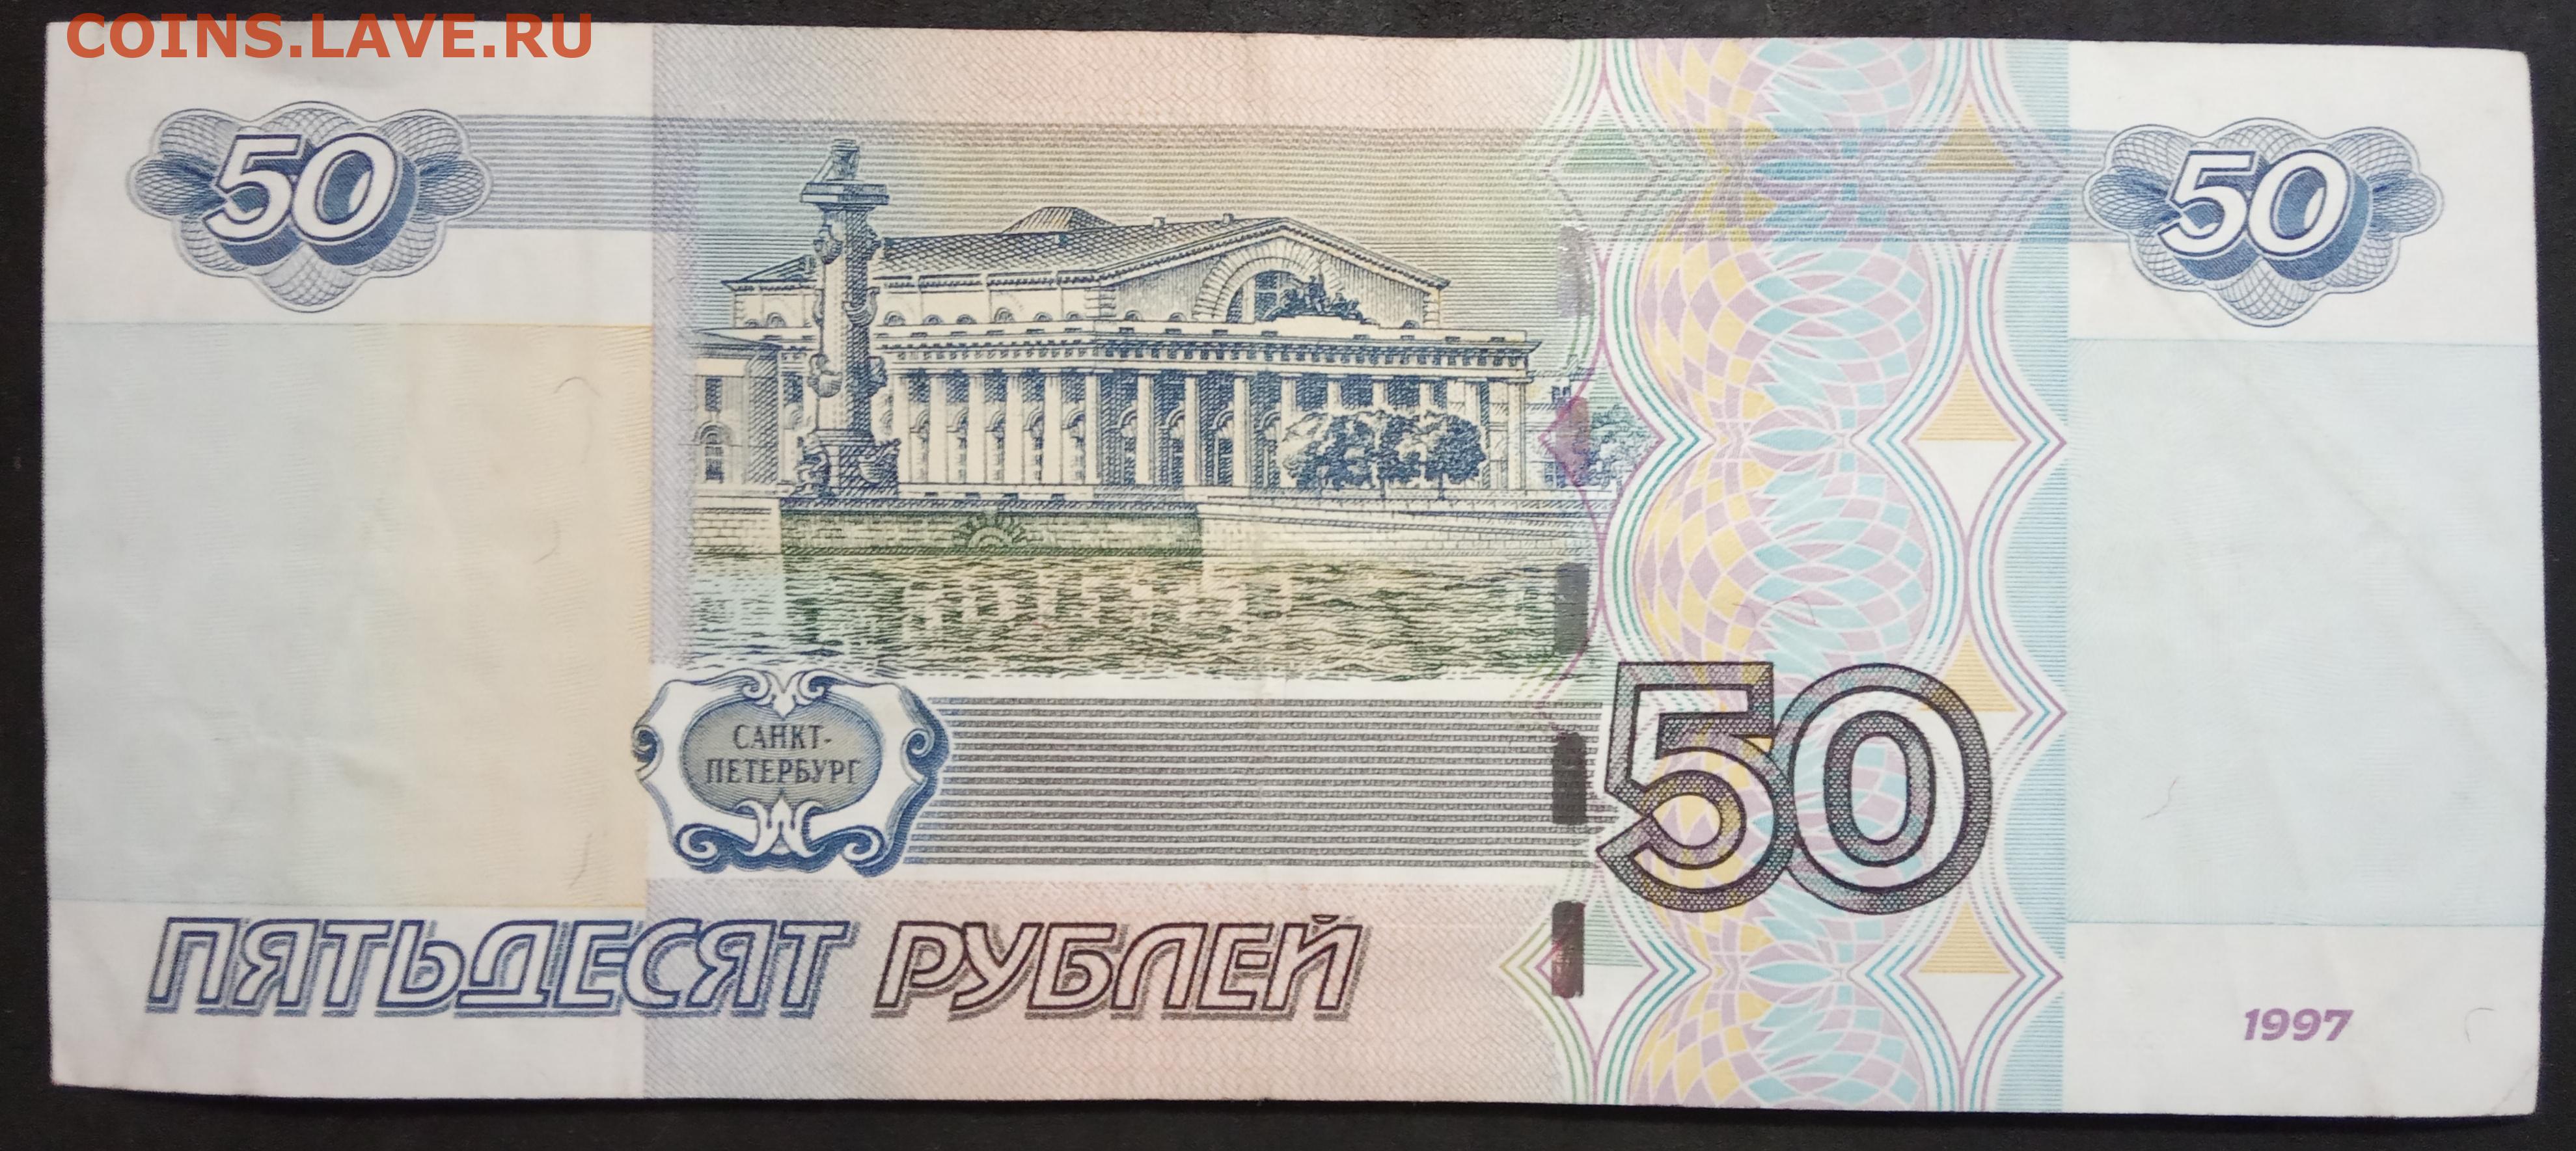 50 рублей уплачено за. Деньги 50 рублей. Купюра 50 р. Купюра 50 рублей. Банкнота 50 рублей.